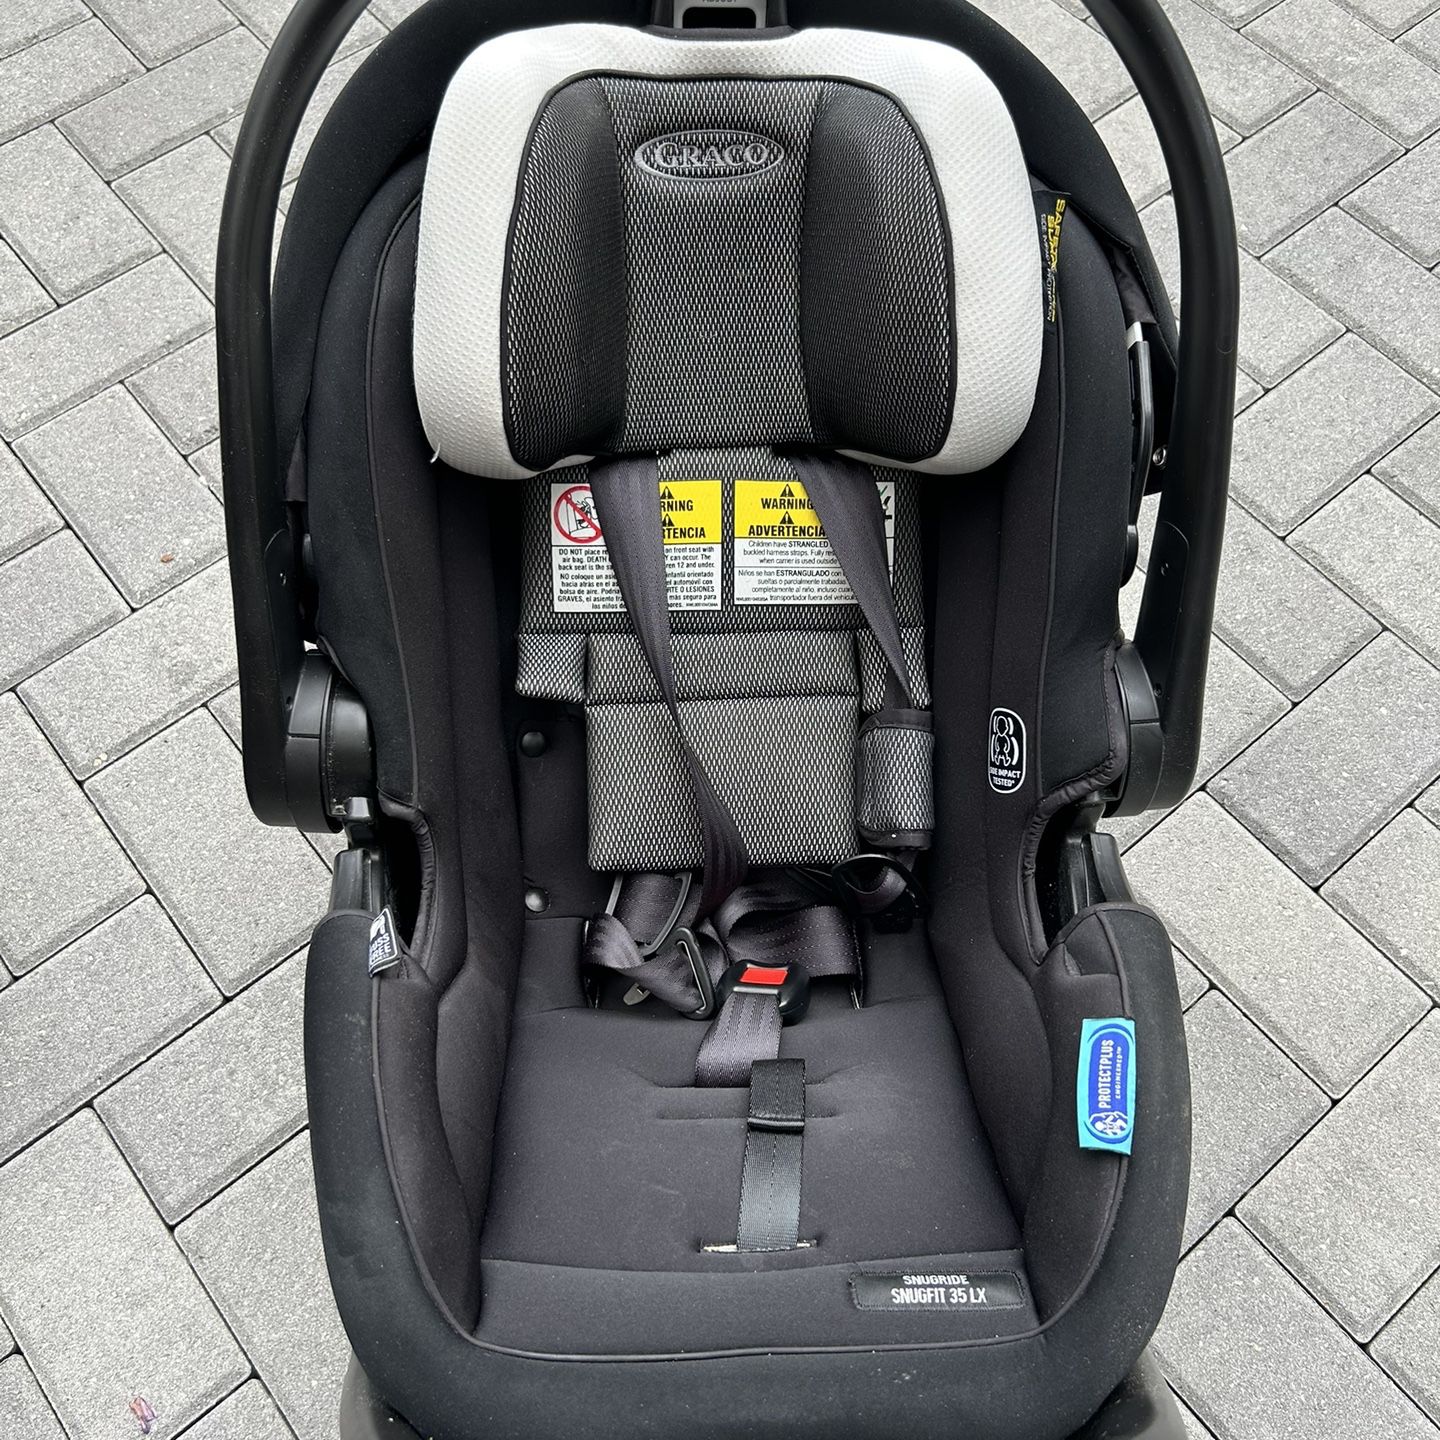 Baby Car Seat Original Price $200